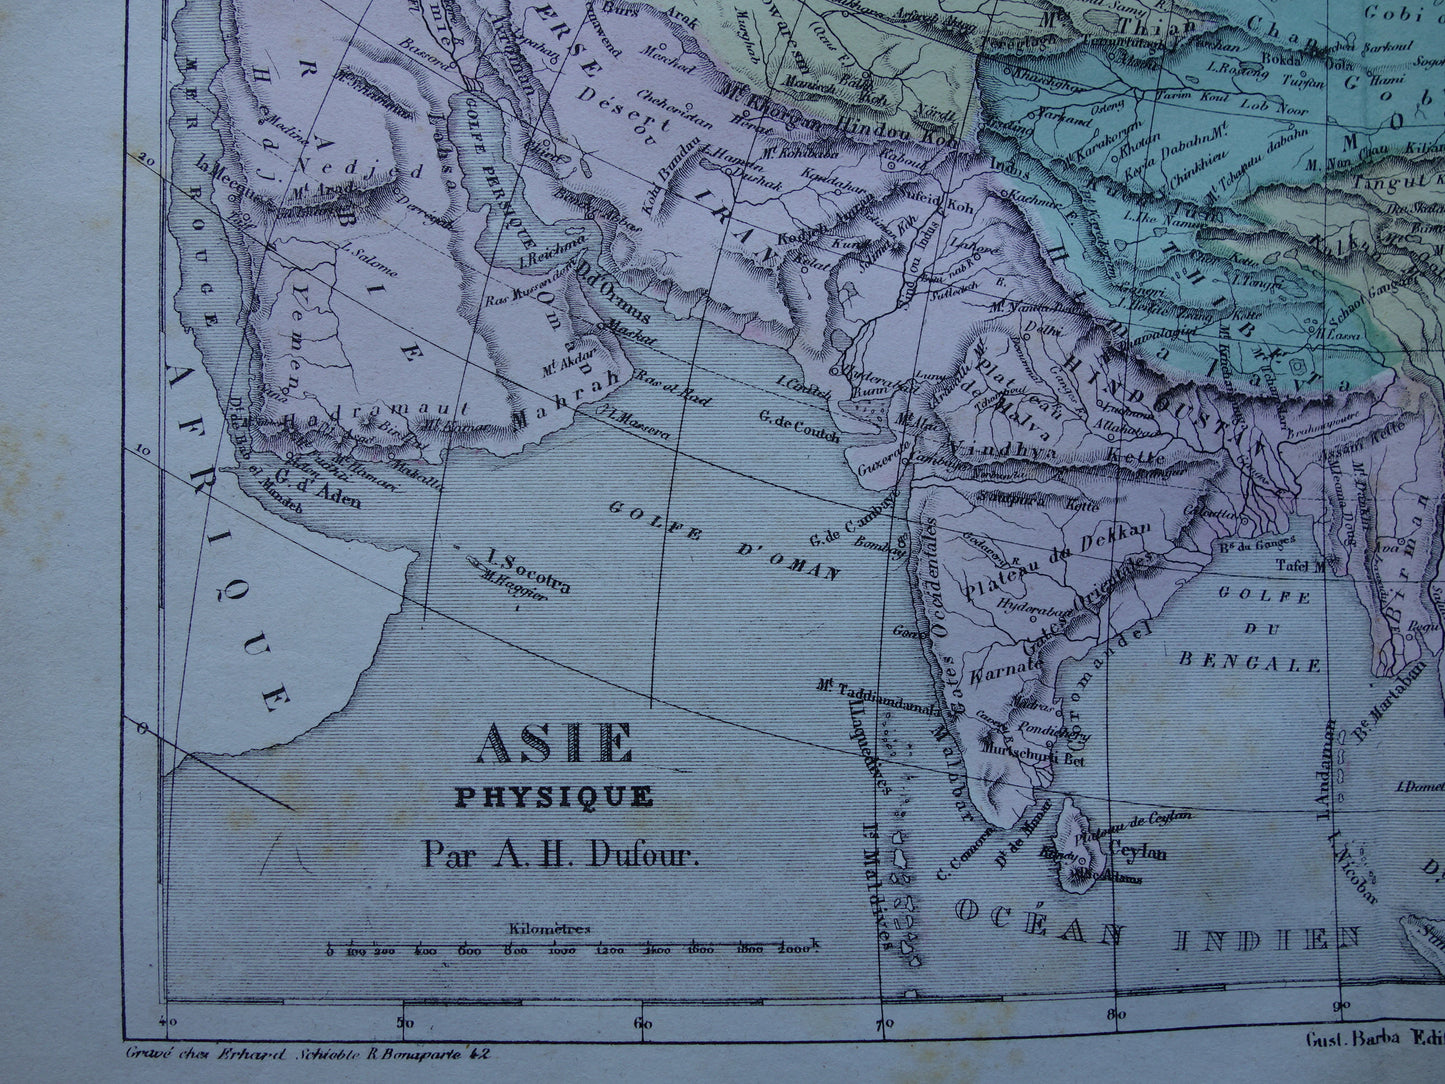 AZIË oude kaart van Azië uit 1858 set van 2 originele antieke Franse landkaarten China India Indonesië vintage kaarten